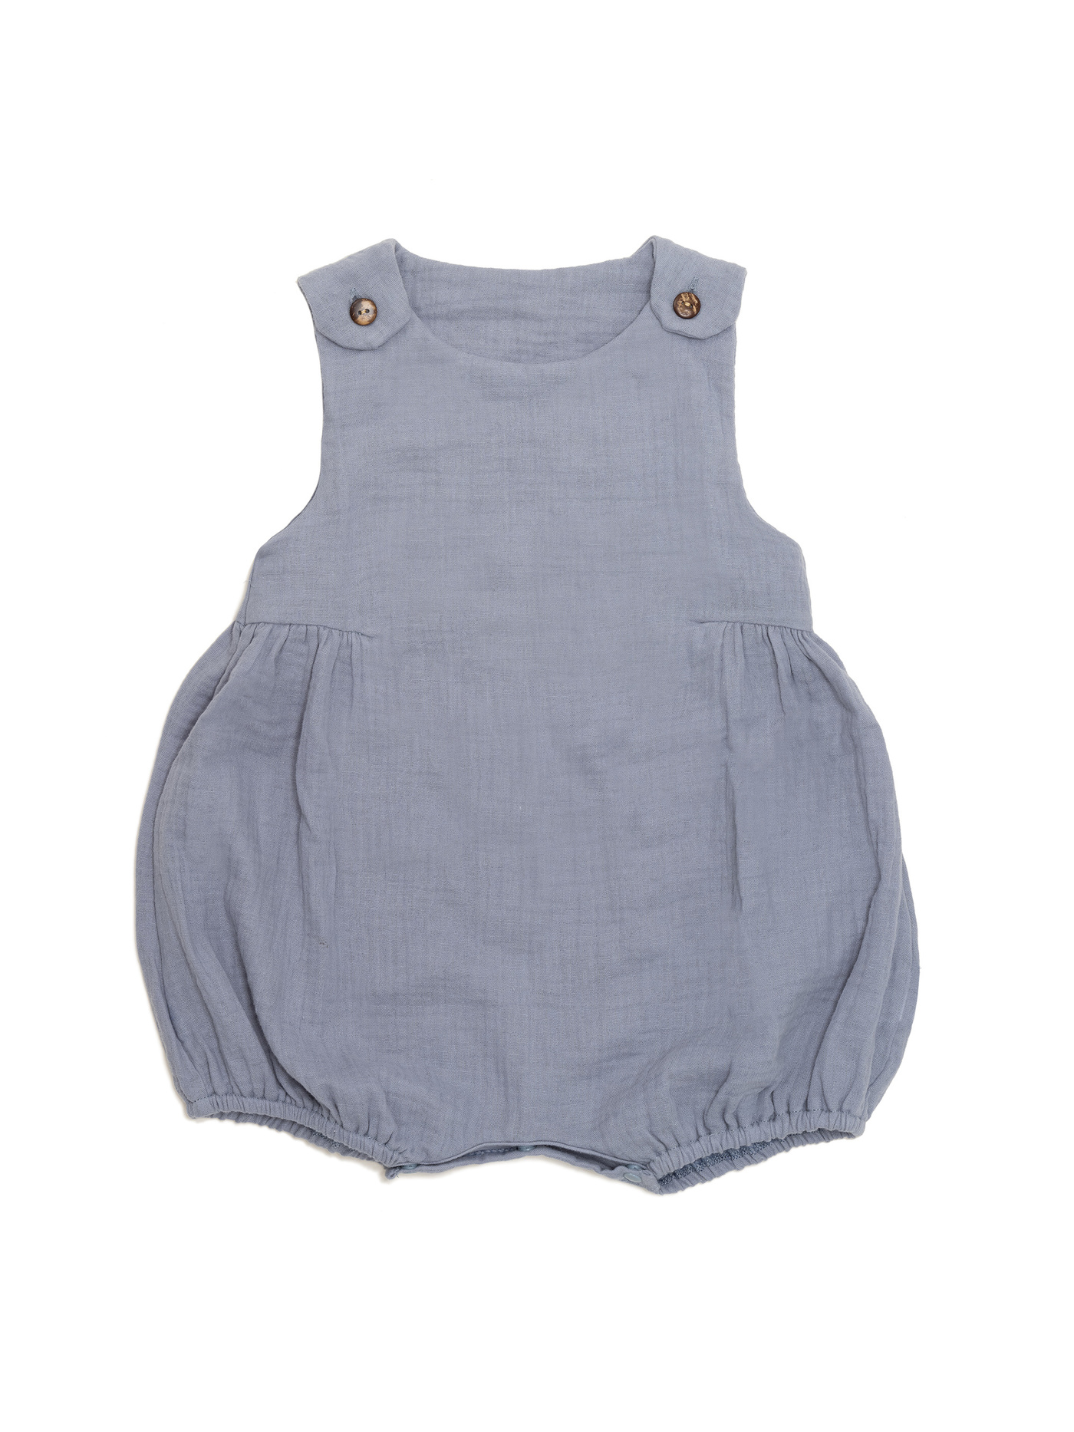 organic muslin romper baby kids clothing toddler cute romper for infants